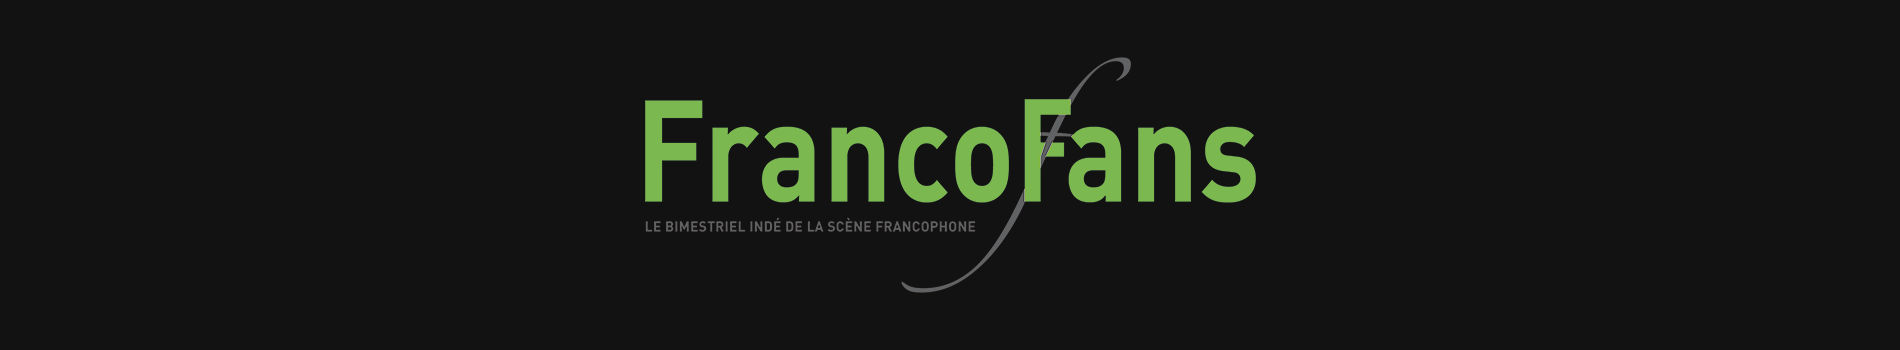 logo_francofans